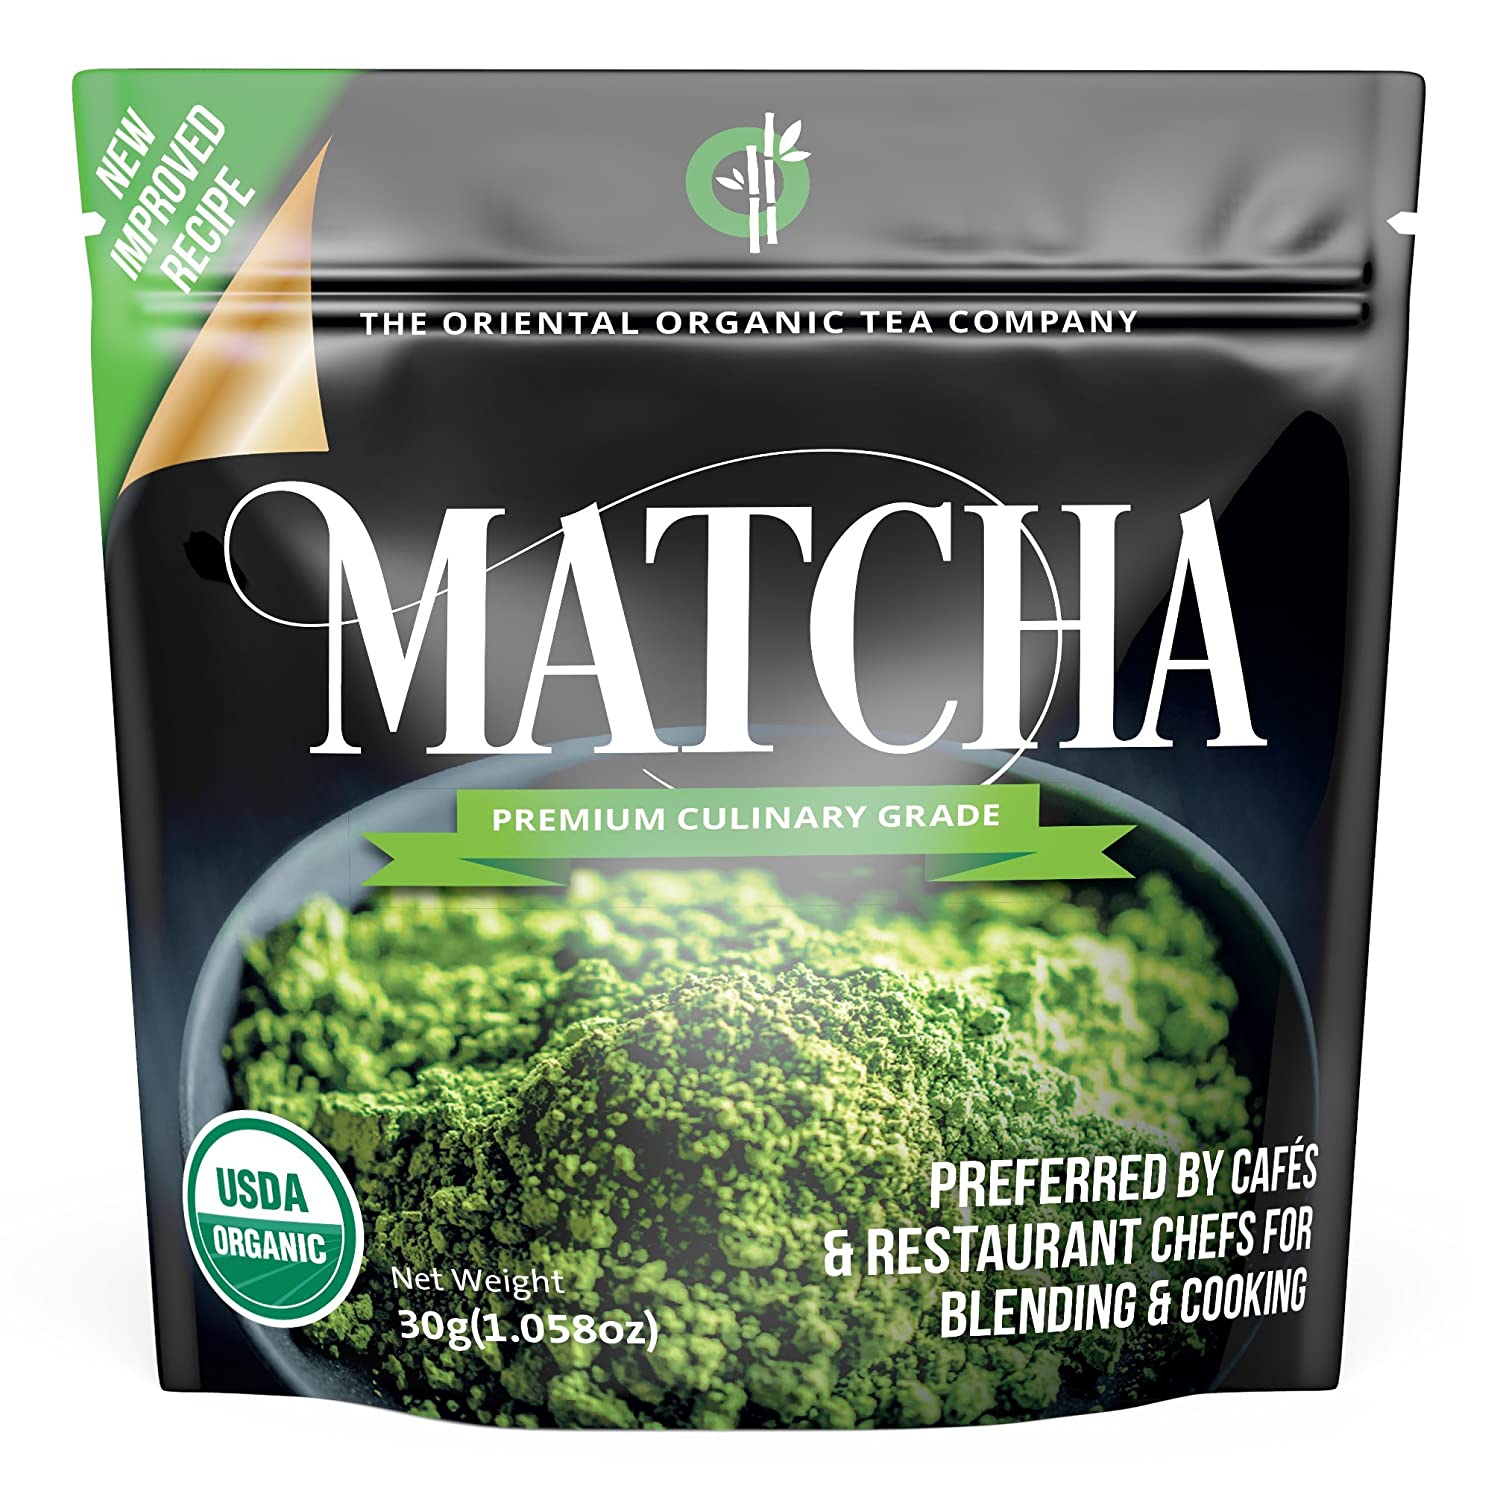 1.06-Oz The Oriental Organic Matcha Green Tea Powder $2.64 w/ S&S + Free Shipping w/ Prime or $25+